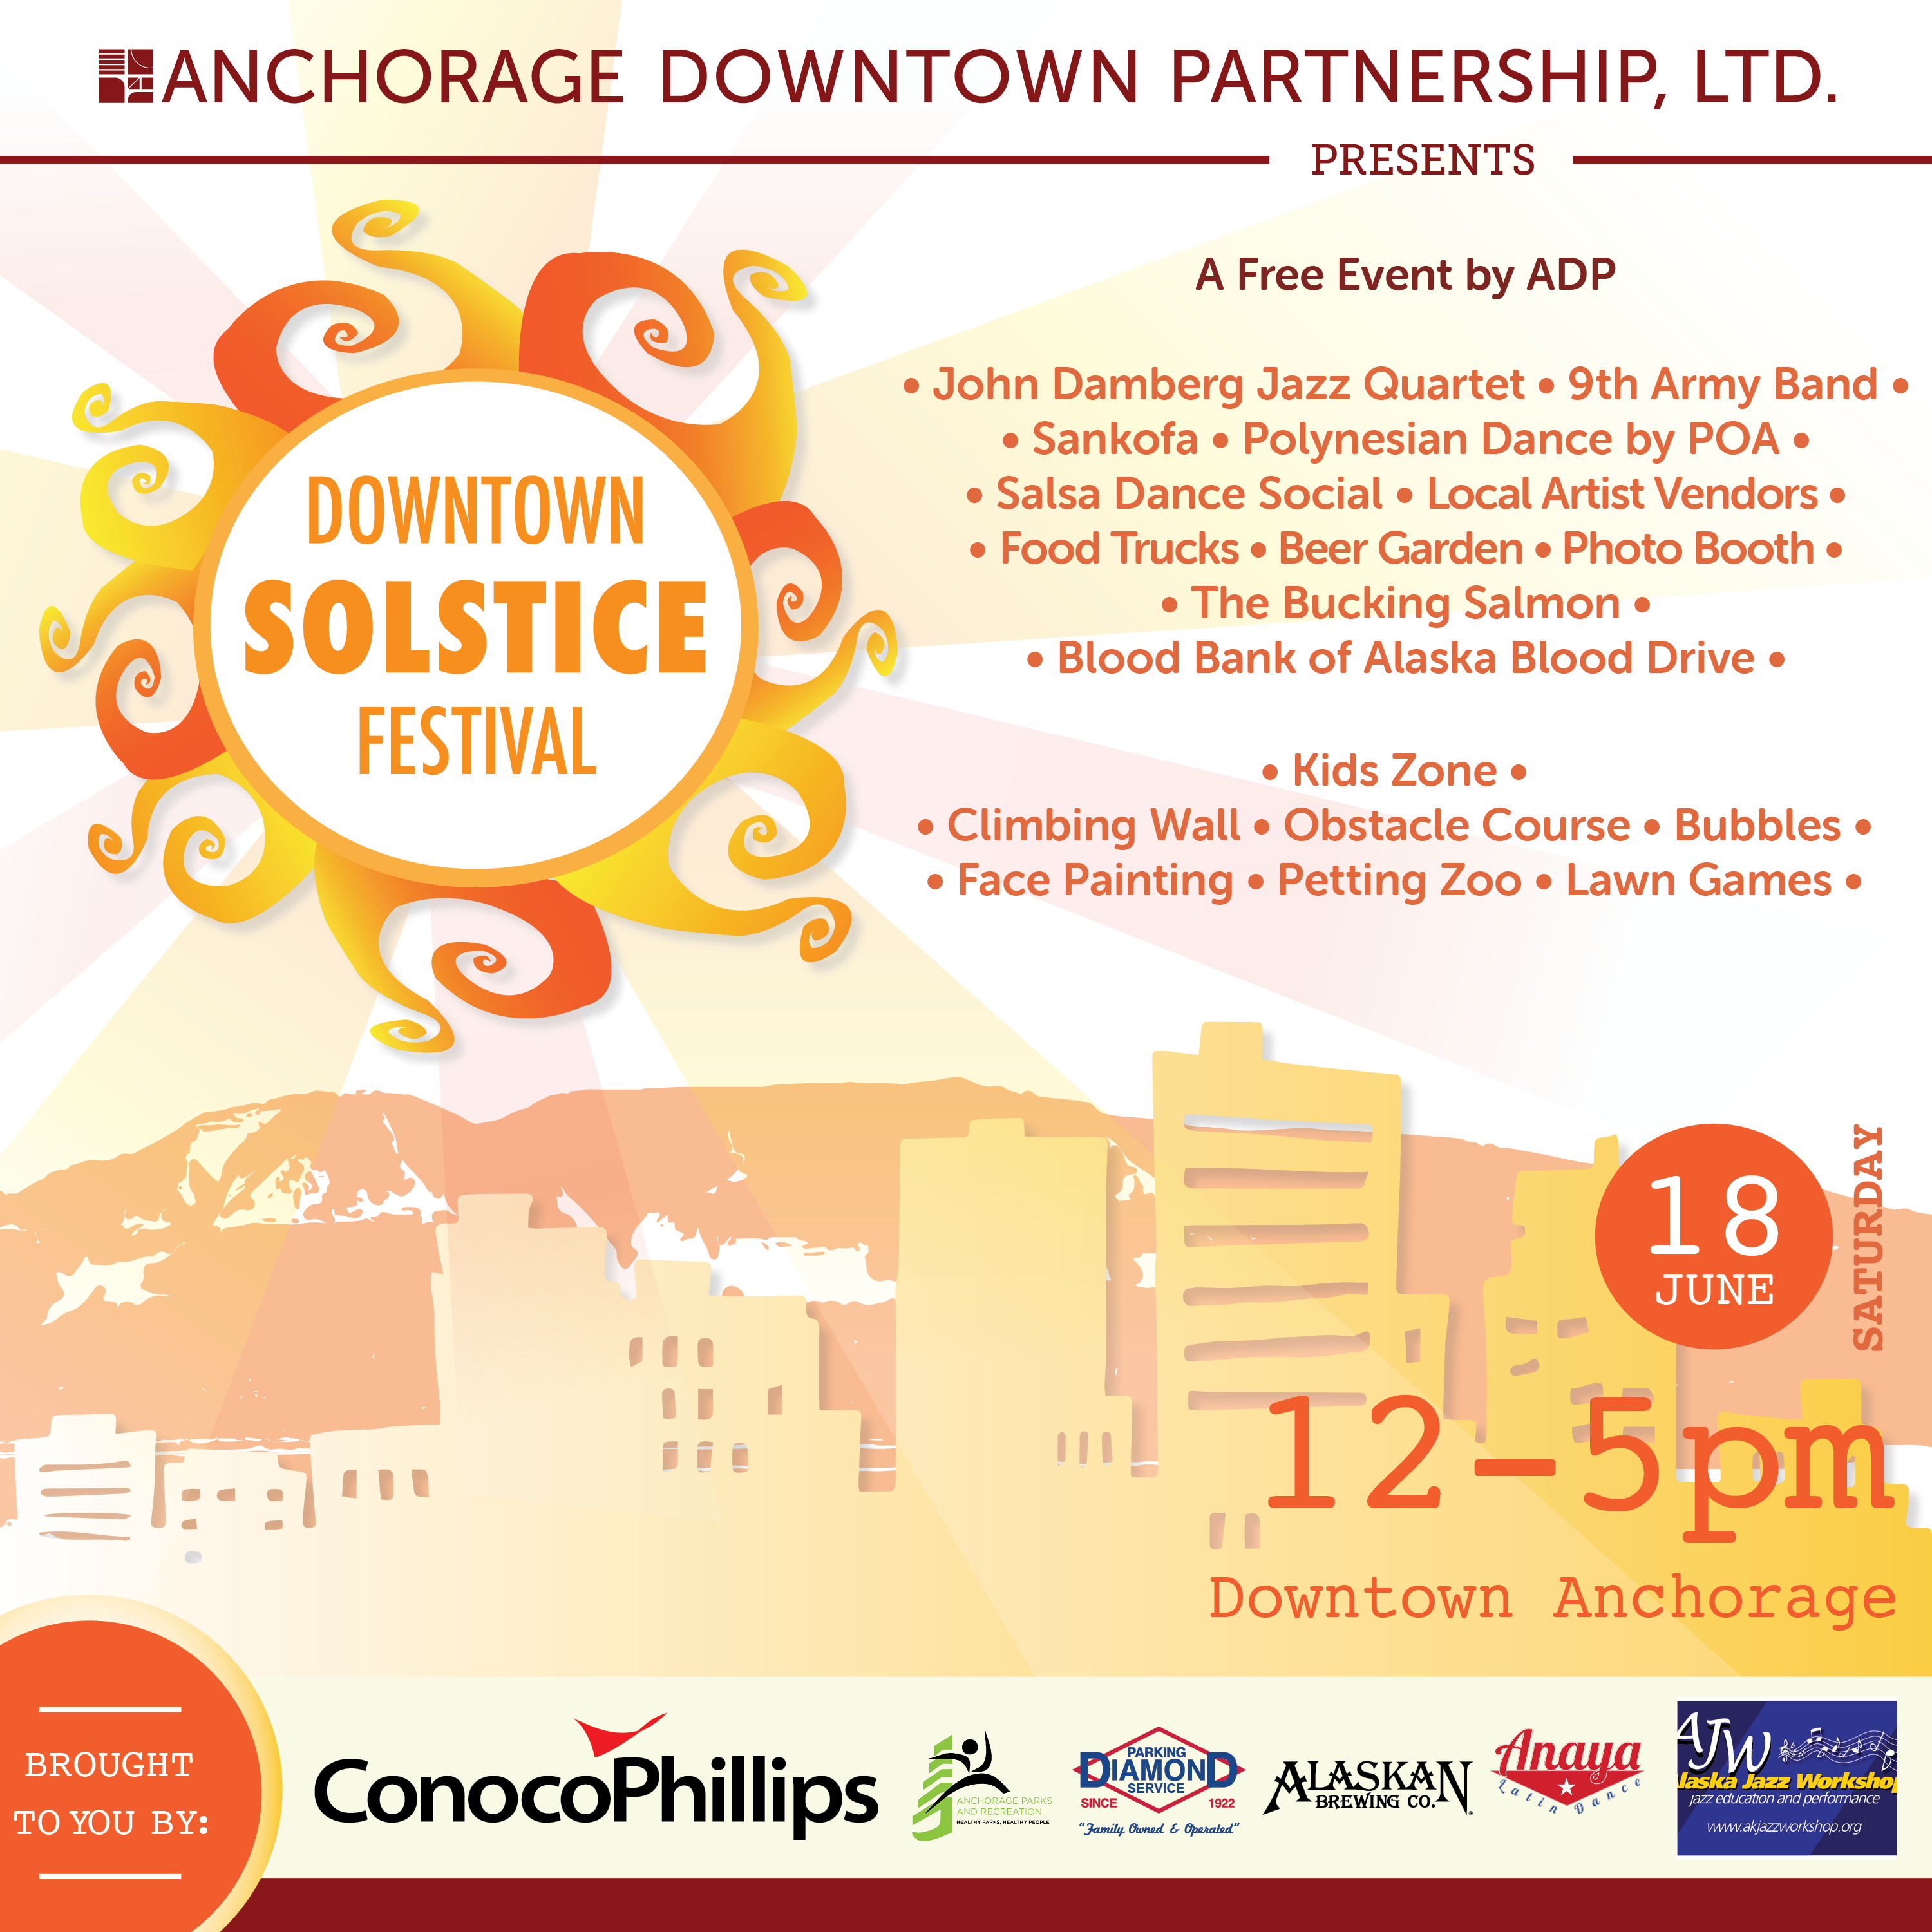 Downtown Summer Solstice Festival Anchorage Downtown Partnership, Ltd.